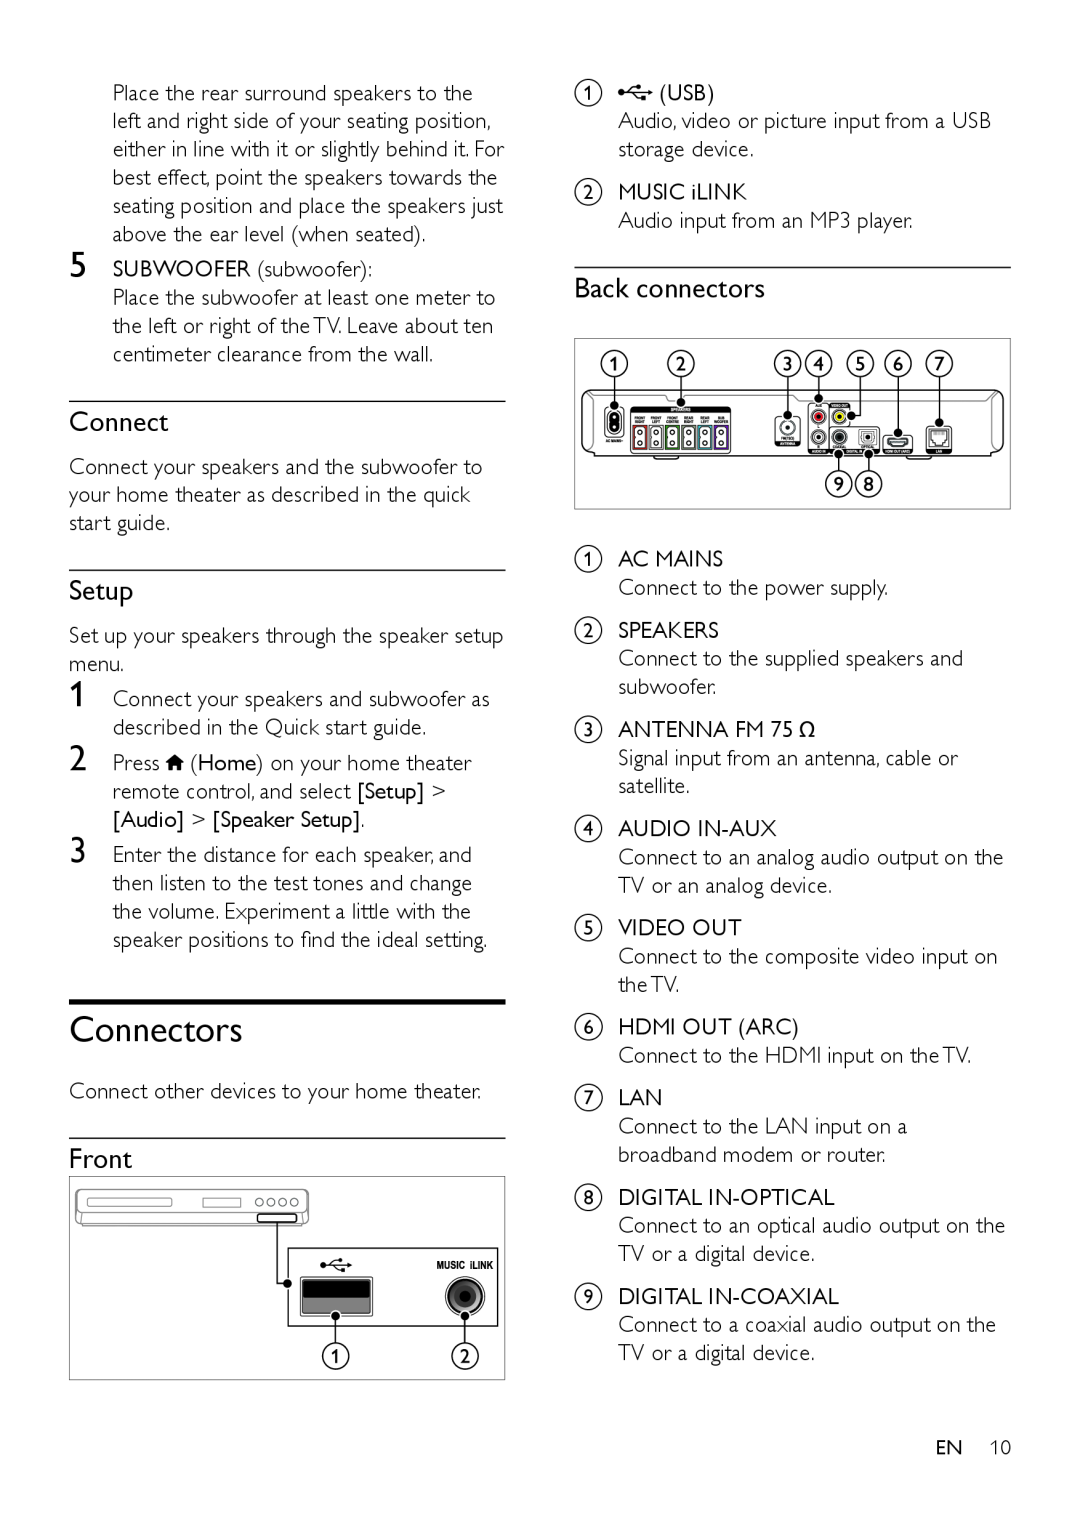 Philips HTS3541 user manual 1 2 3 Connectors, Setup, Front, Back connectors 